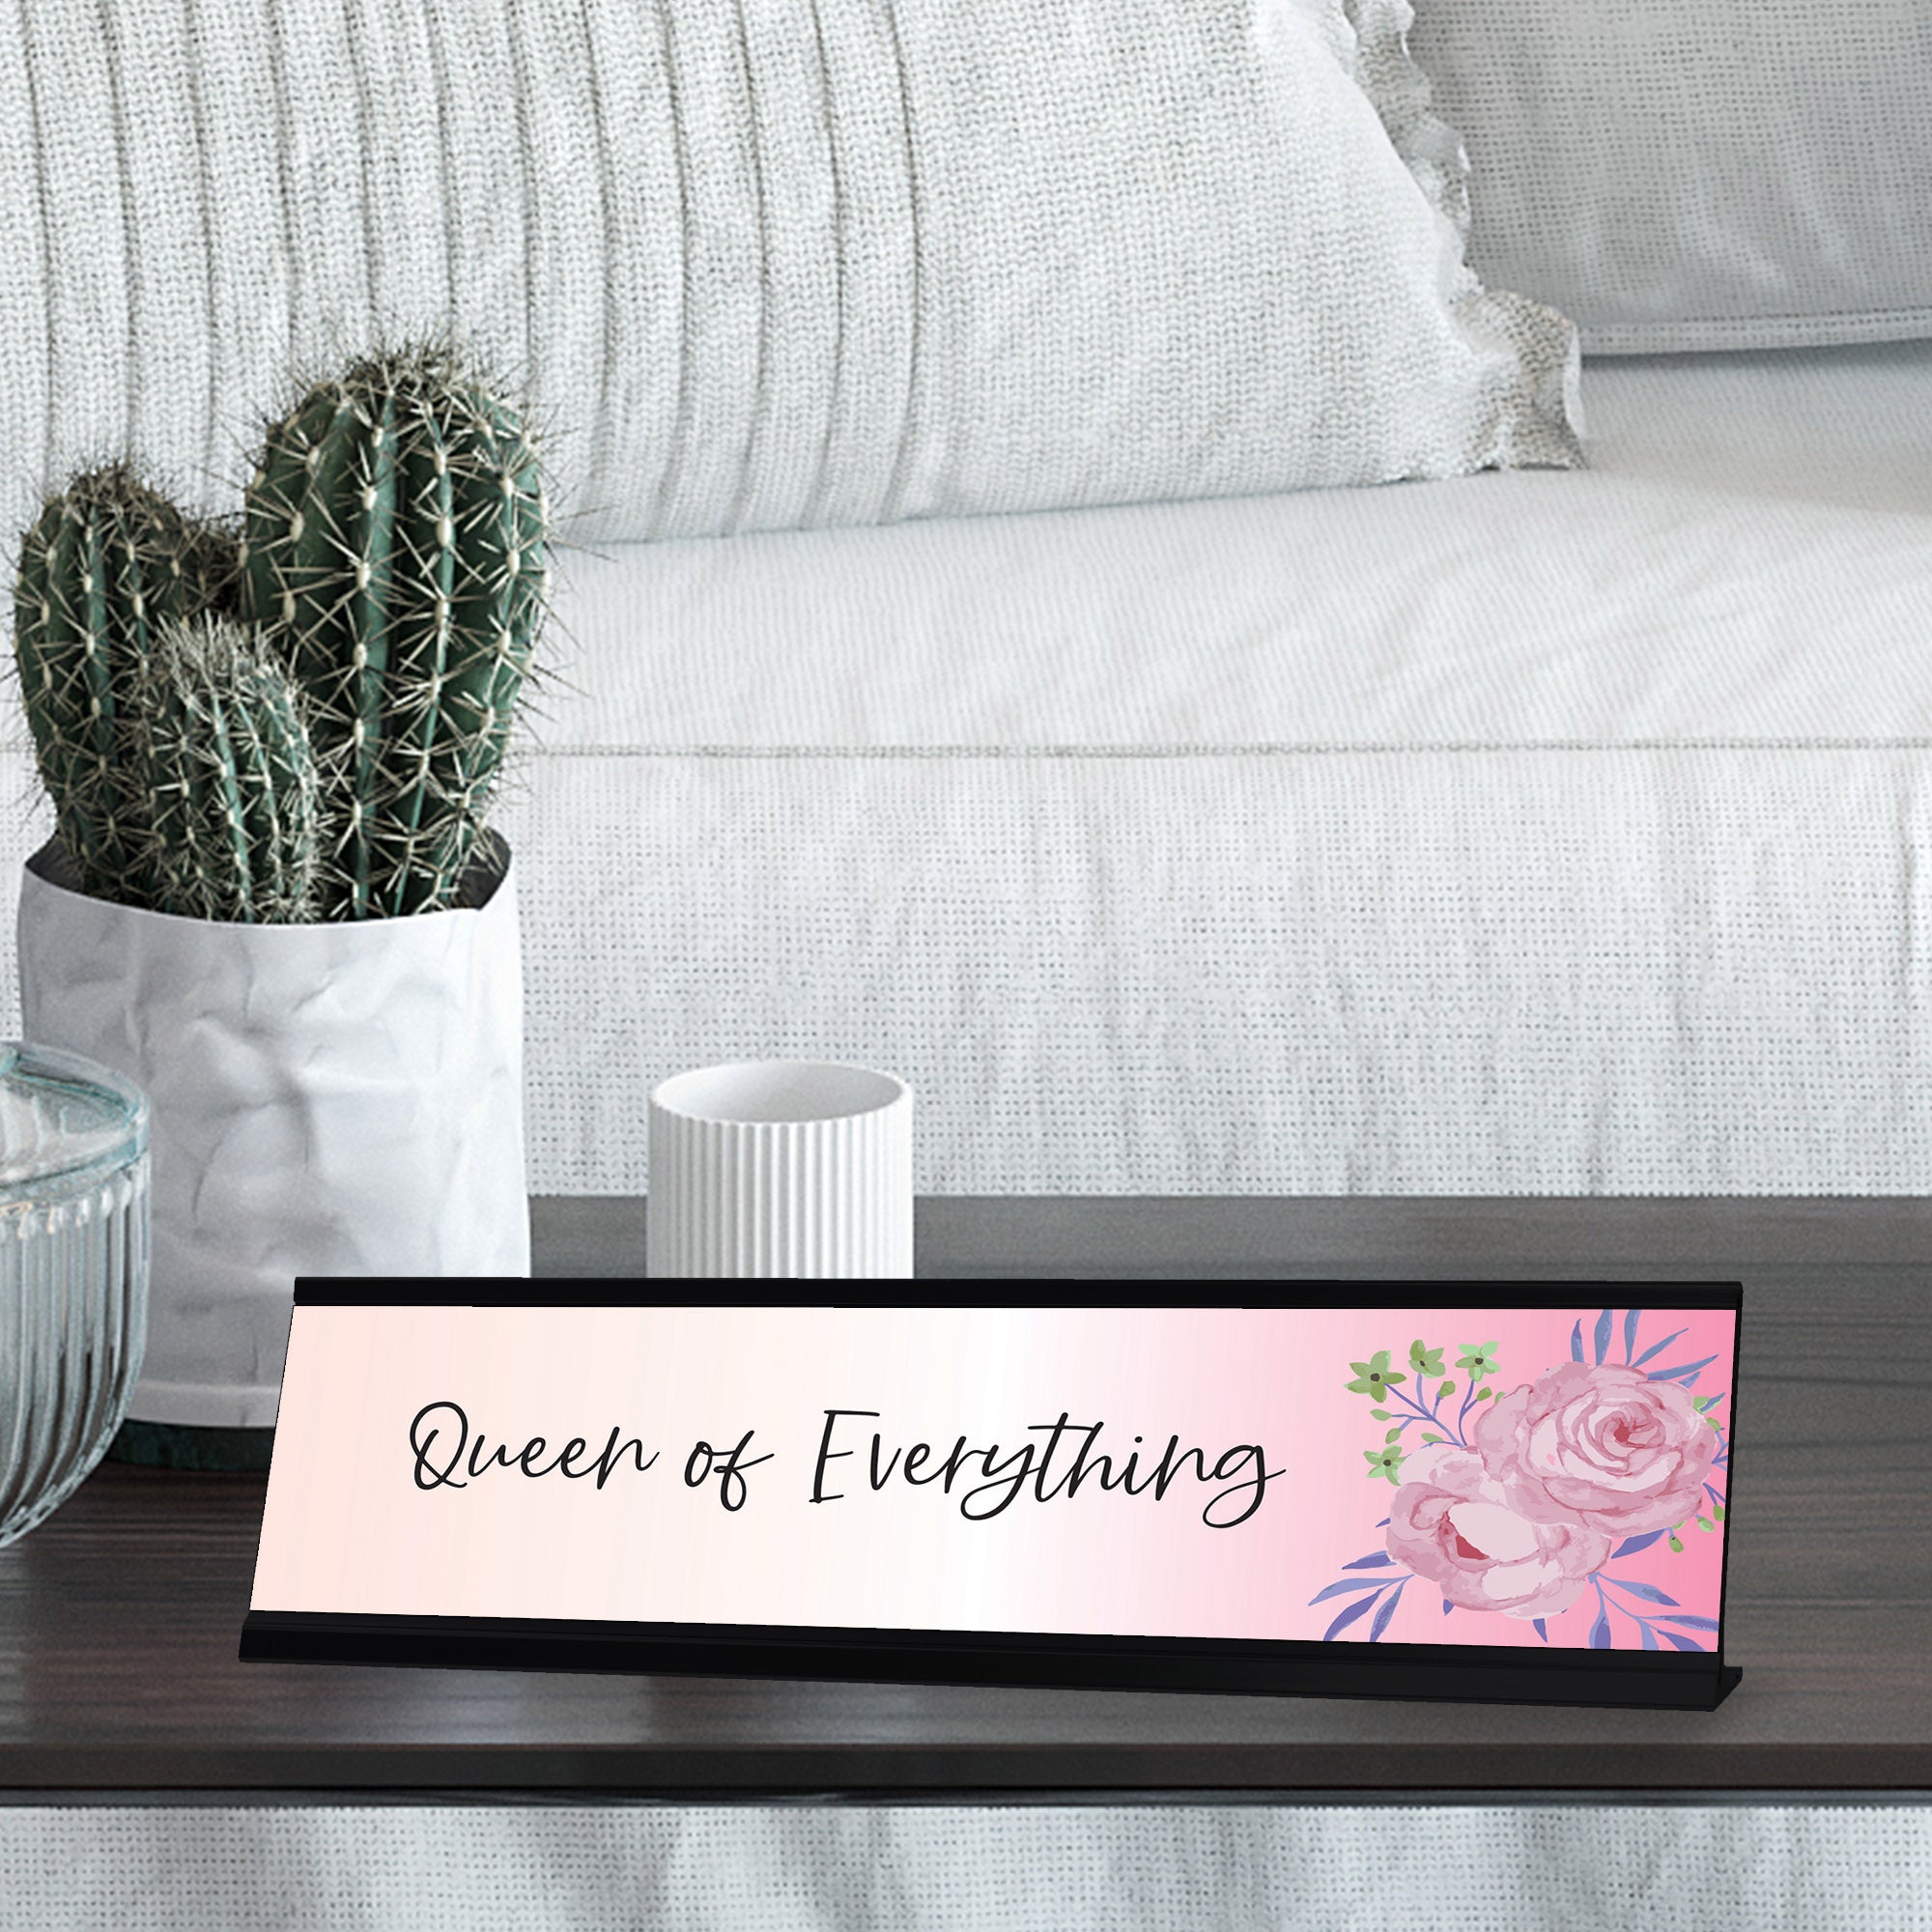 Queen of Everything, Designer Series Desk Sign, Novelty Nameplate (2 x 8")